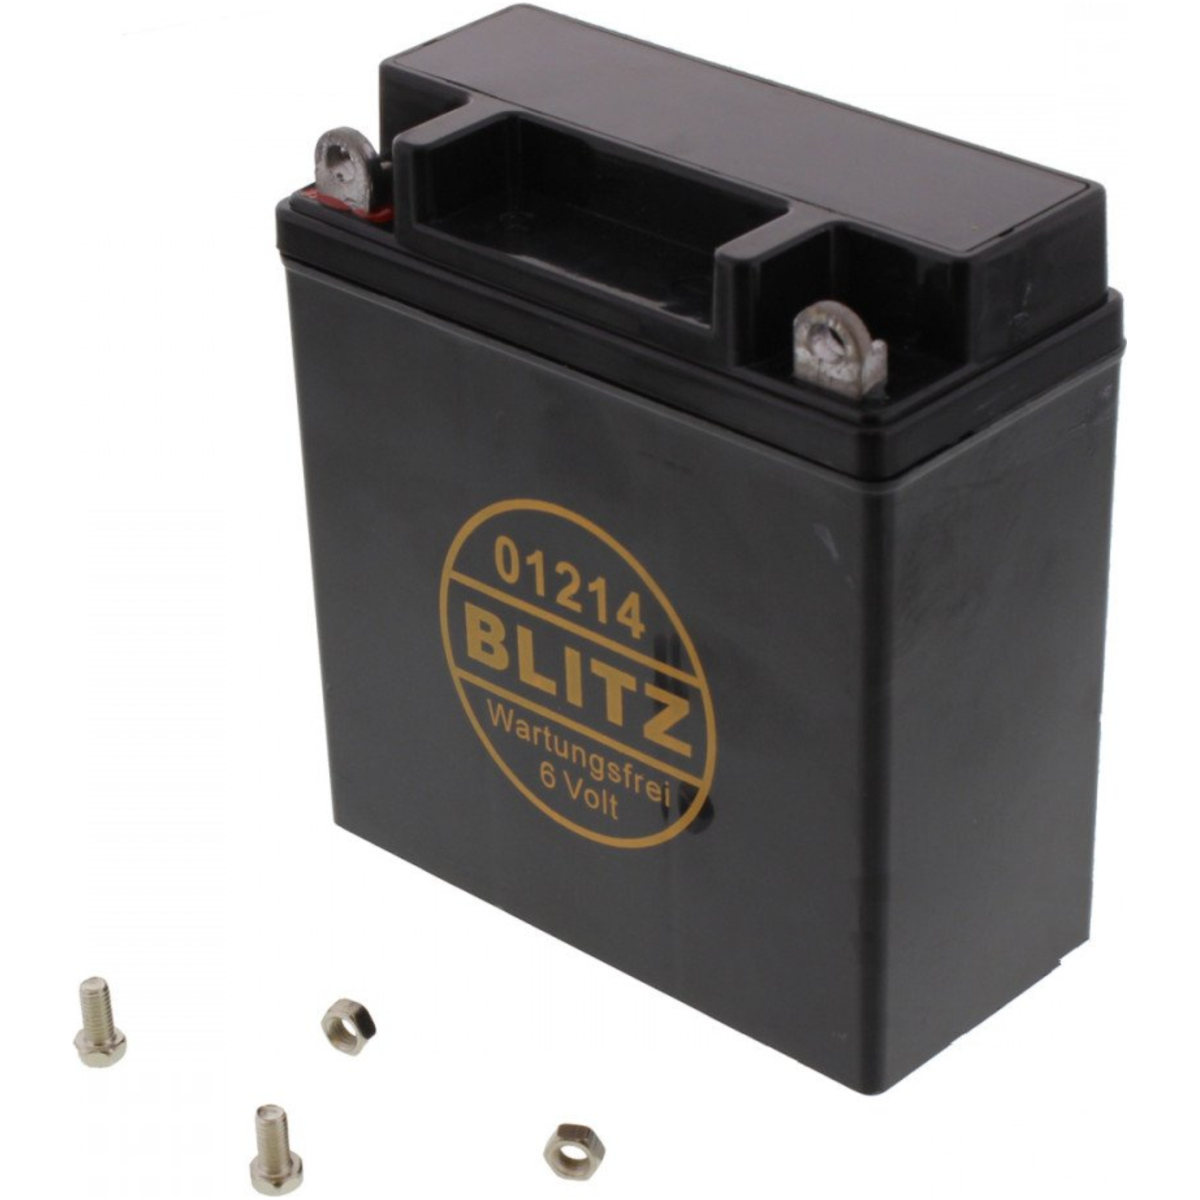 Blitz 0092030 motorradbatterie 01214 gel schwarz 6v von BLITZ